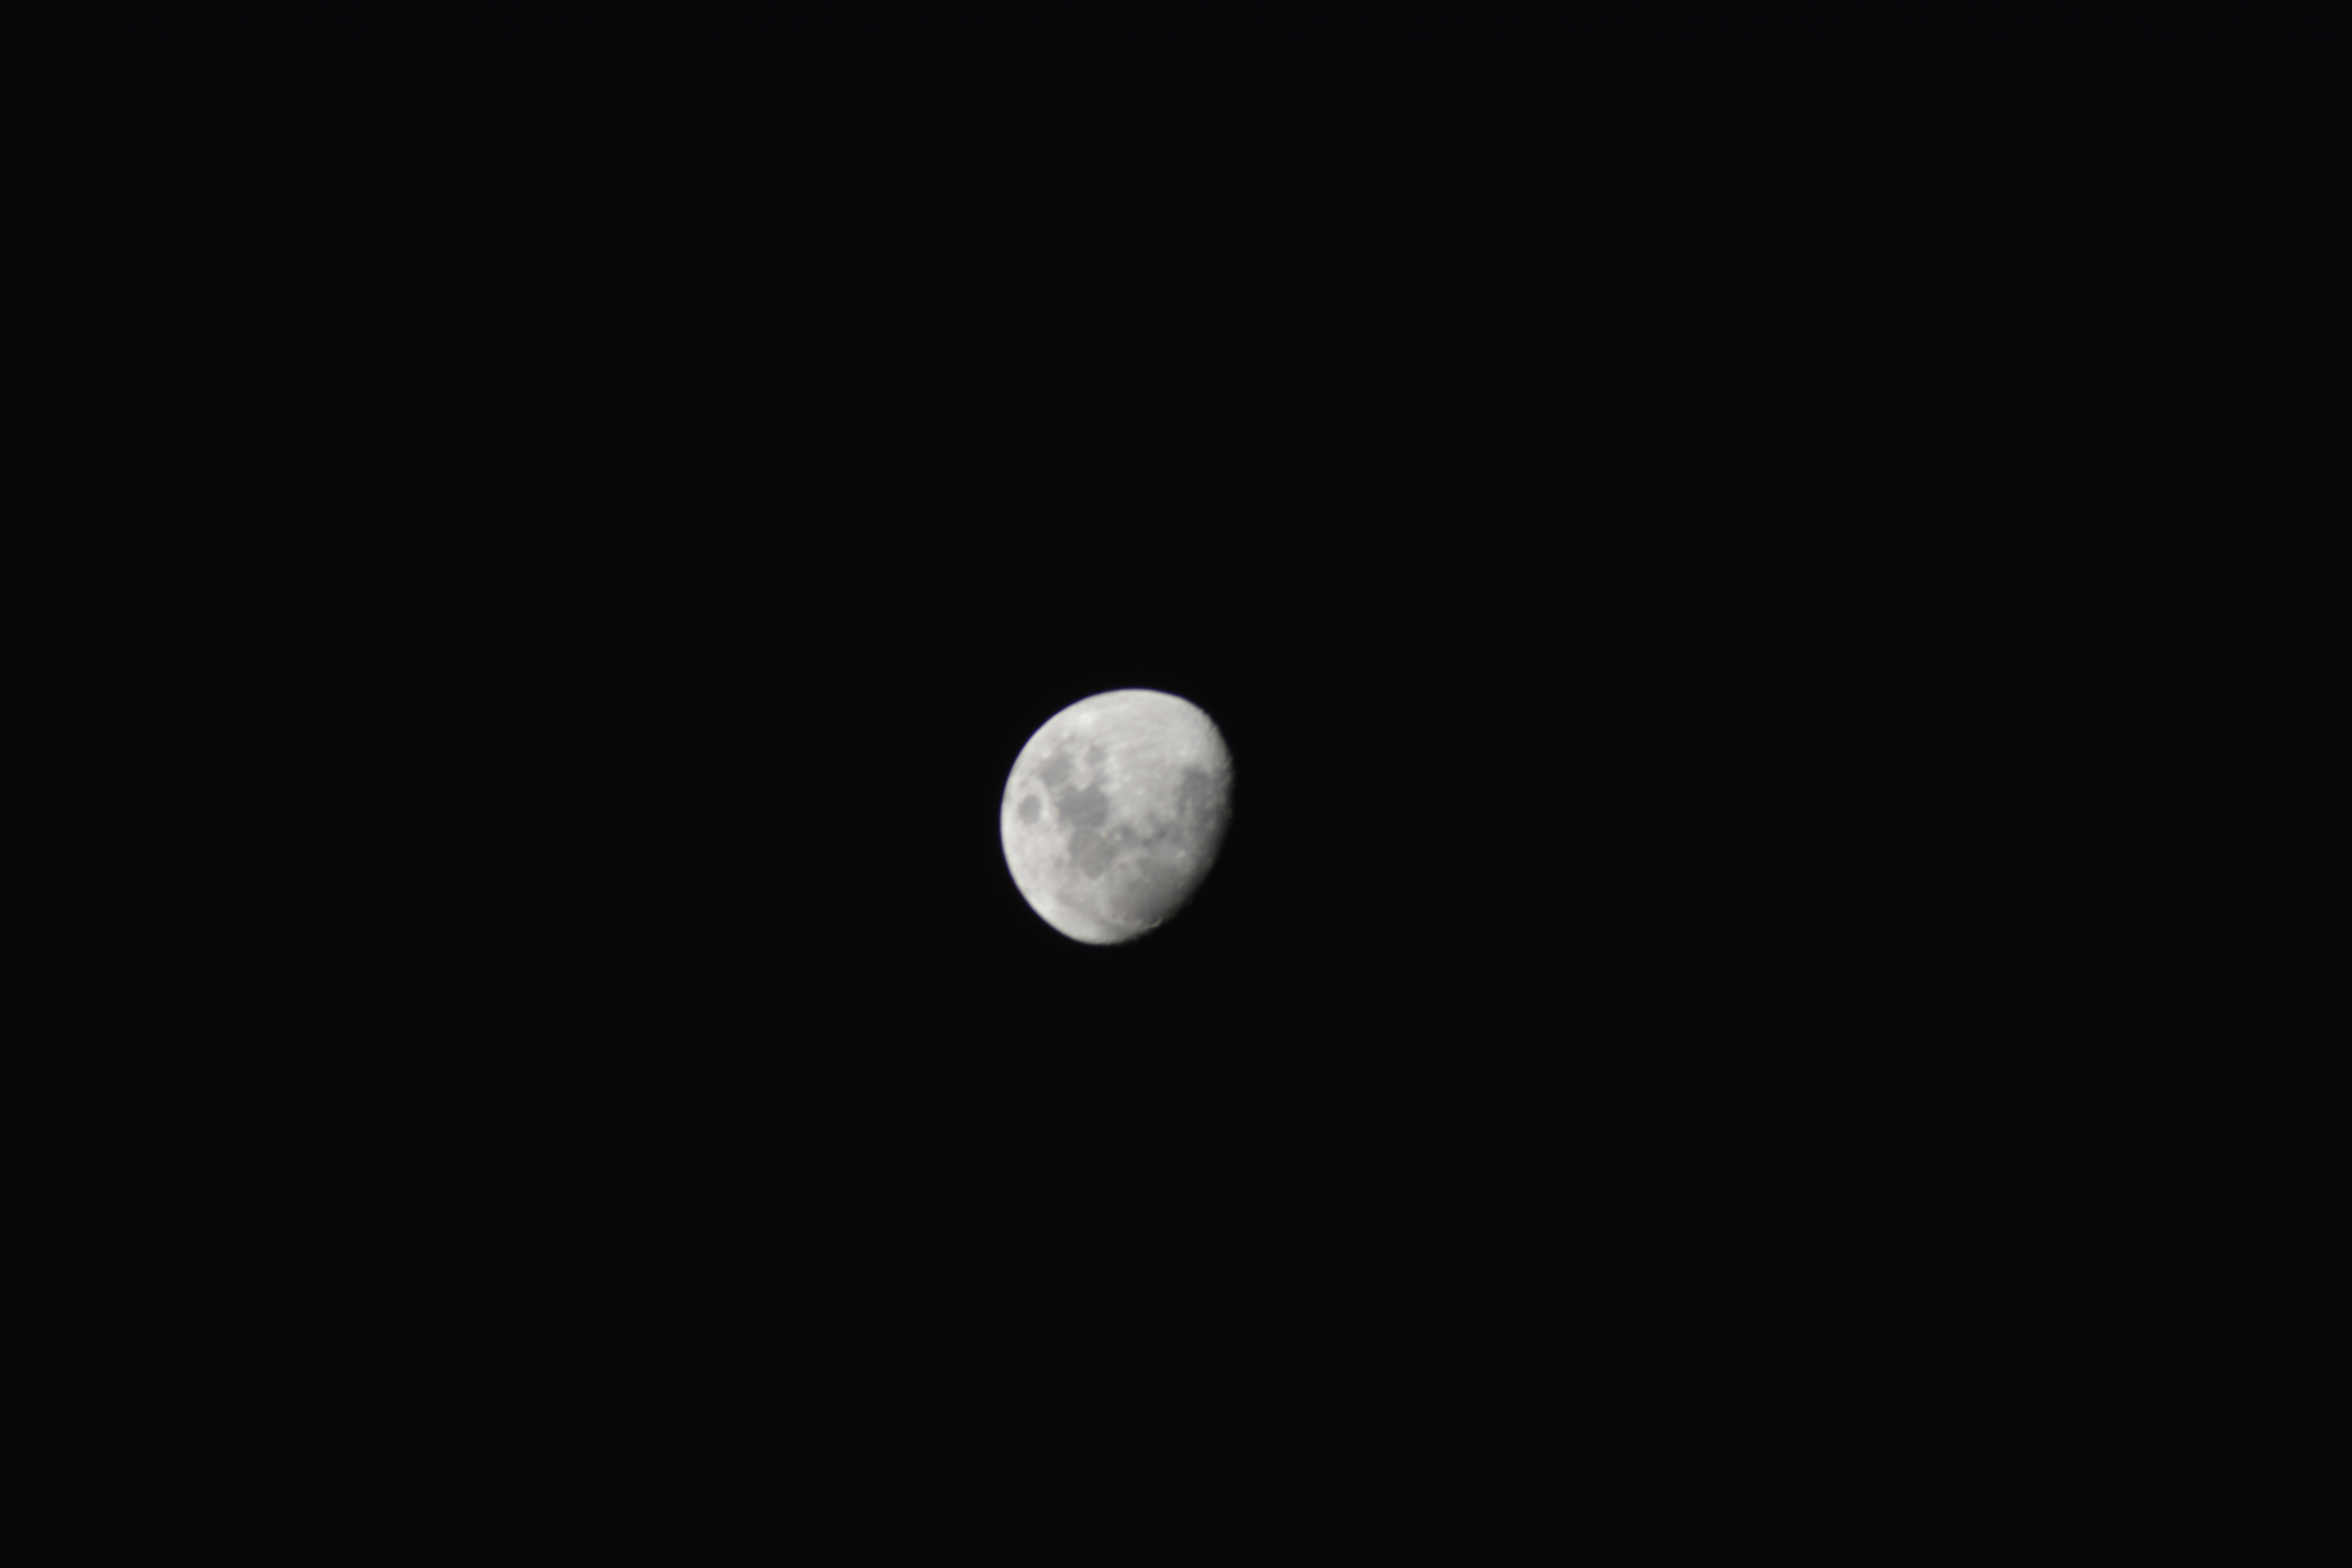 File:Tres cuartos de luna - panoramio.jpg - Wikimedia Commons